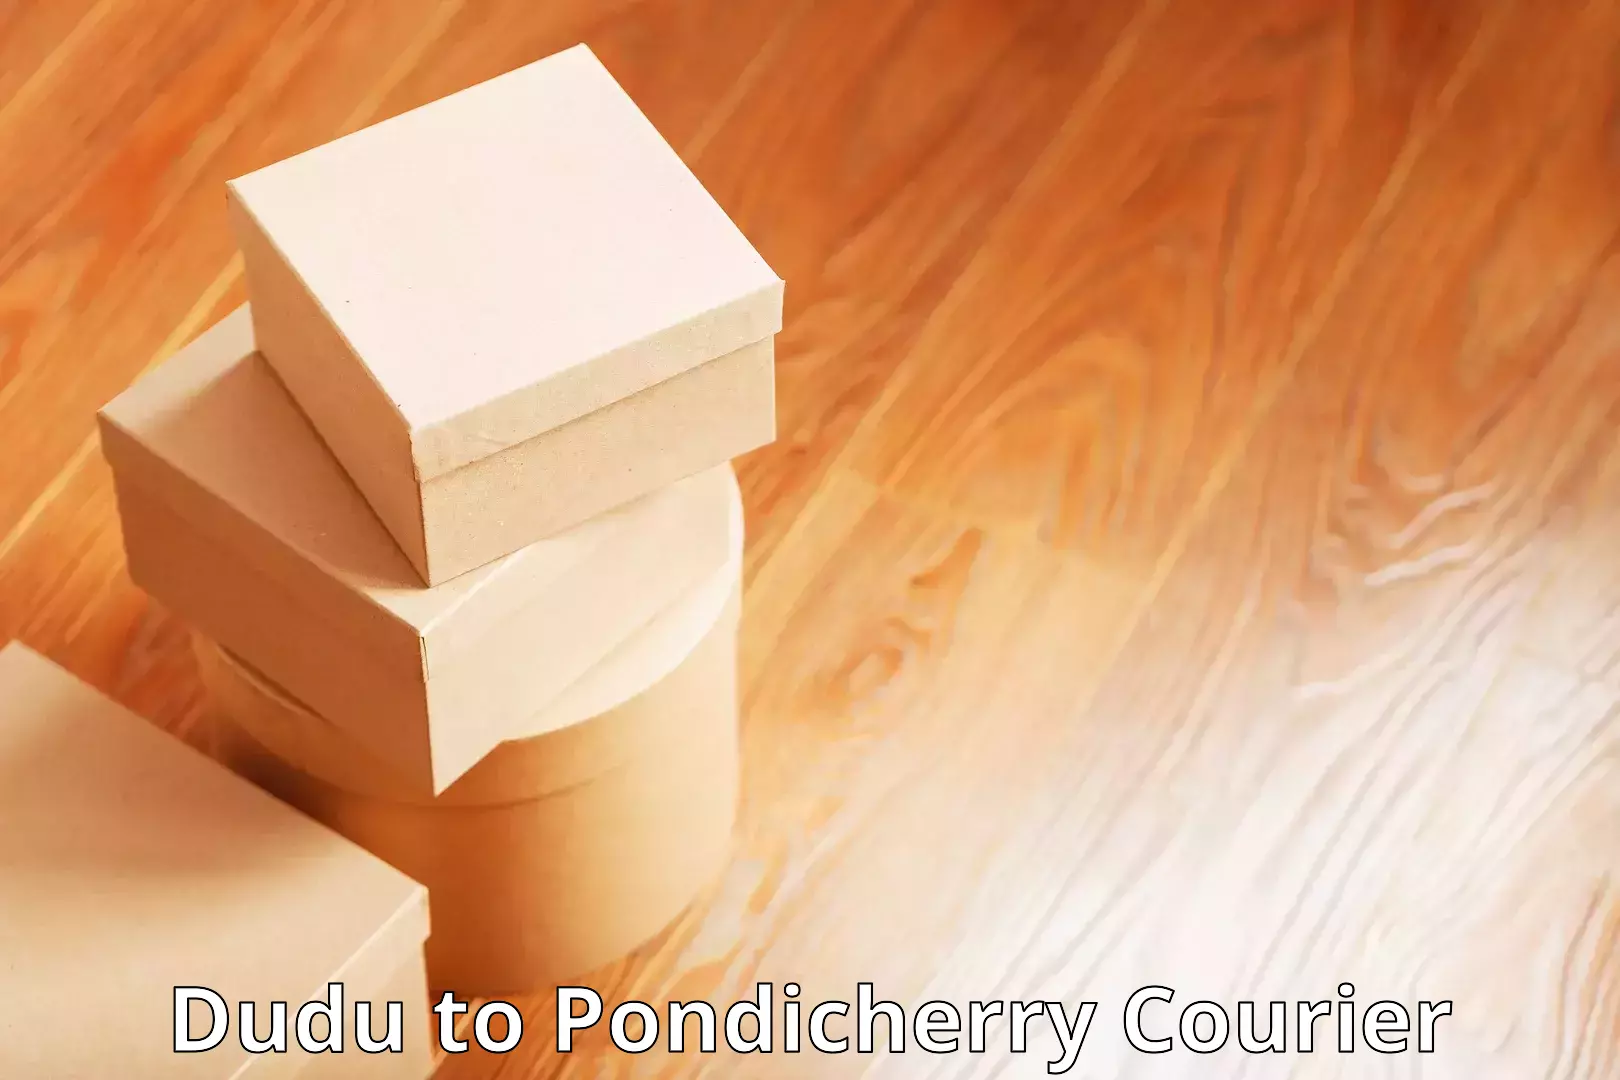 Cash on delivery service Dudu to Pondicherry University